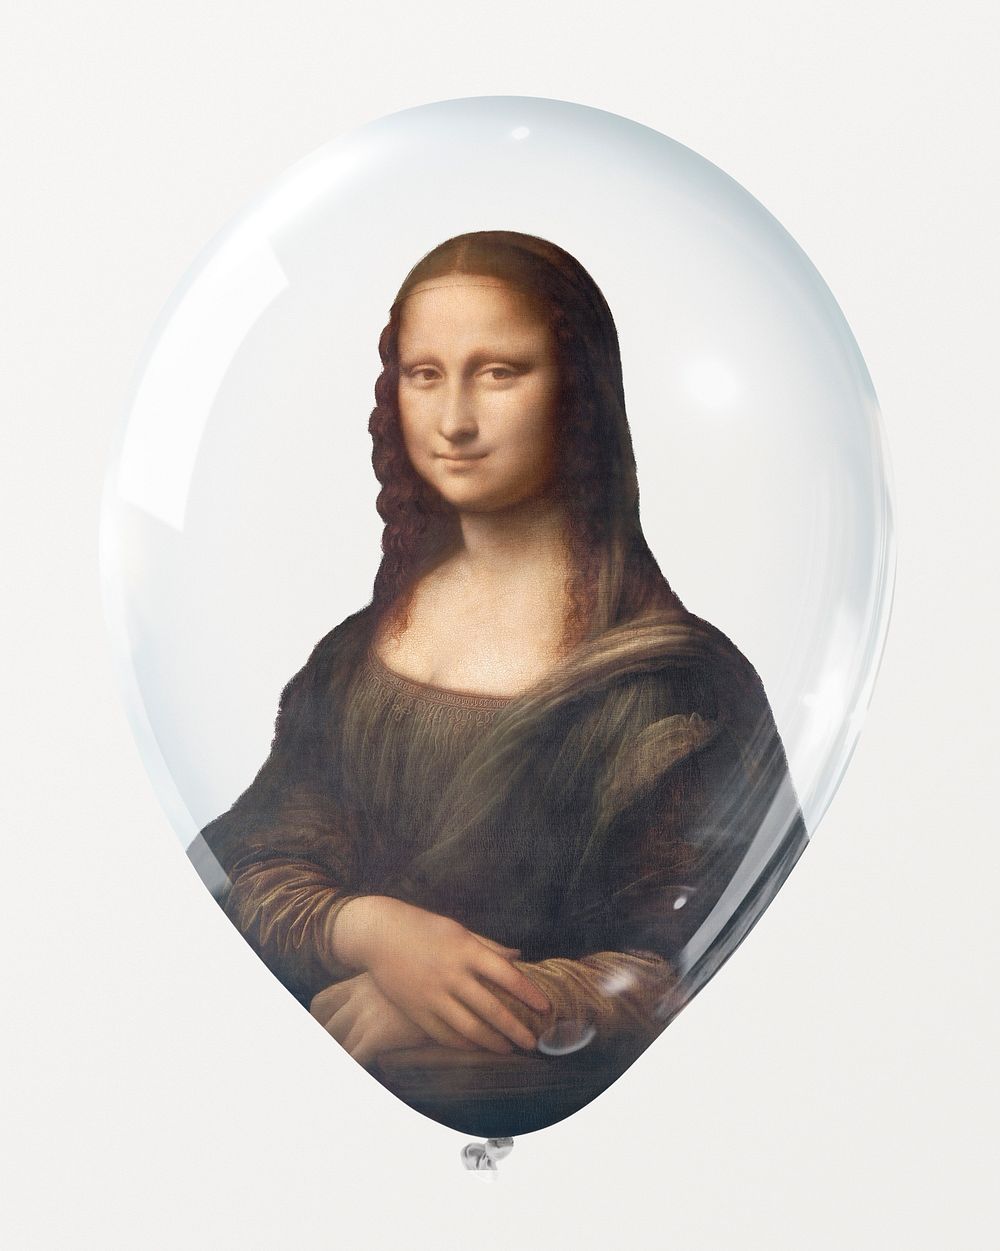 Mona Lisa printed on clear balloon, Leonardo da Vinci's famous artwork, remixed by rawpixel